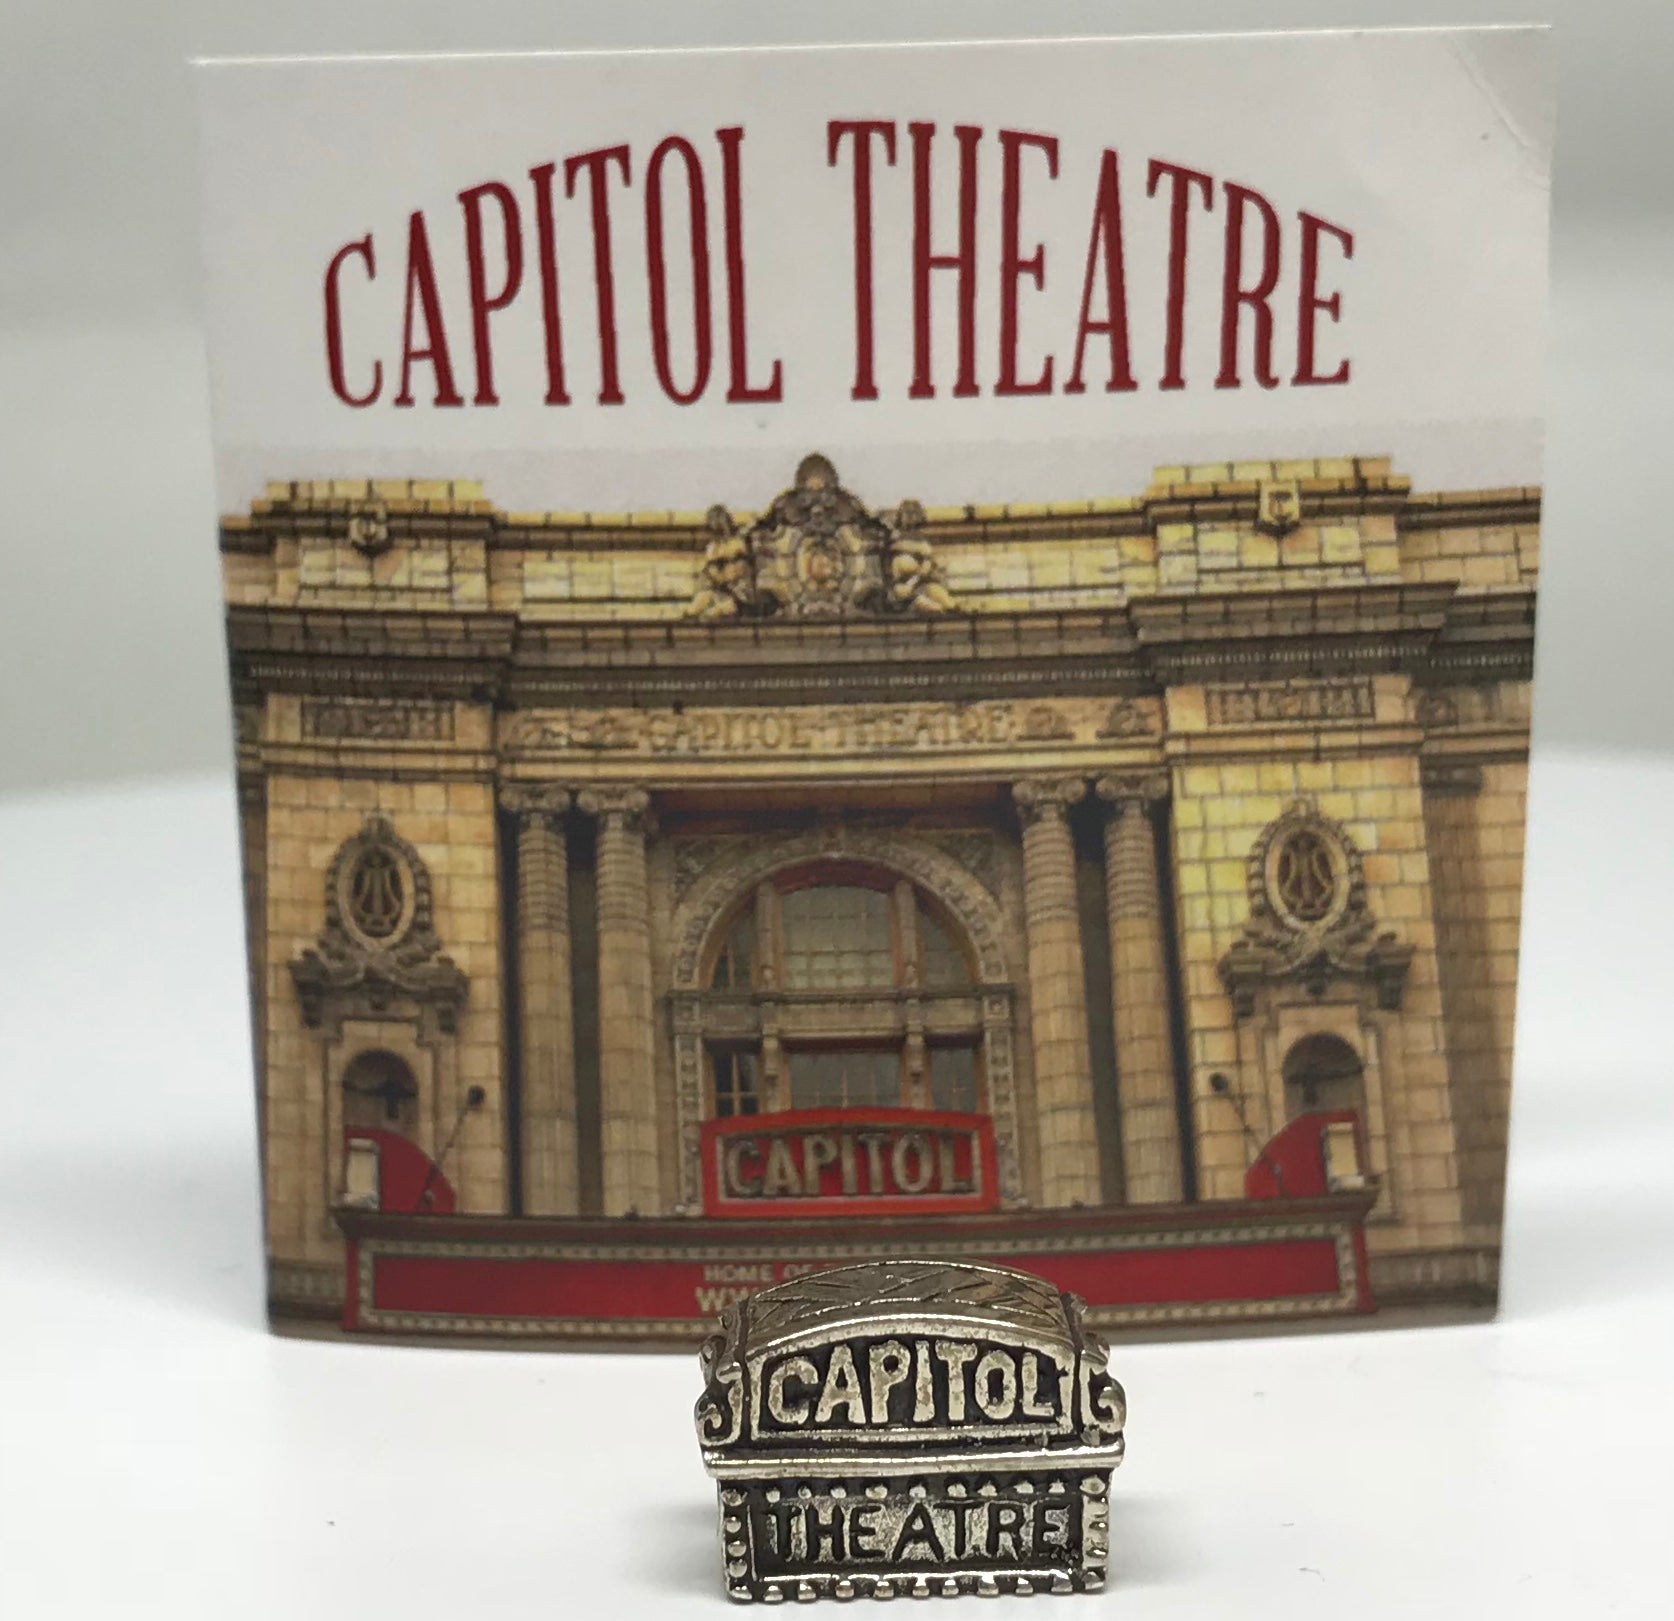 Capitol Theatre Bead-Howard's Exclusive-Howard's Diamond Center